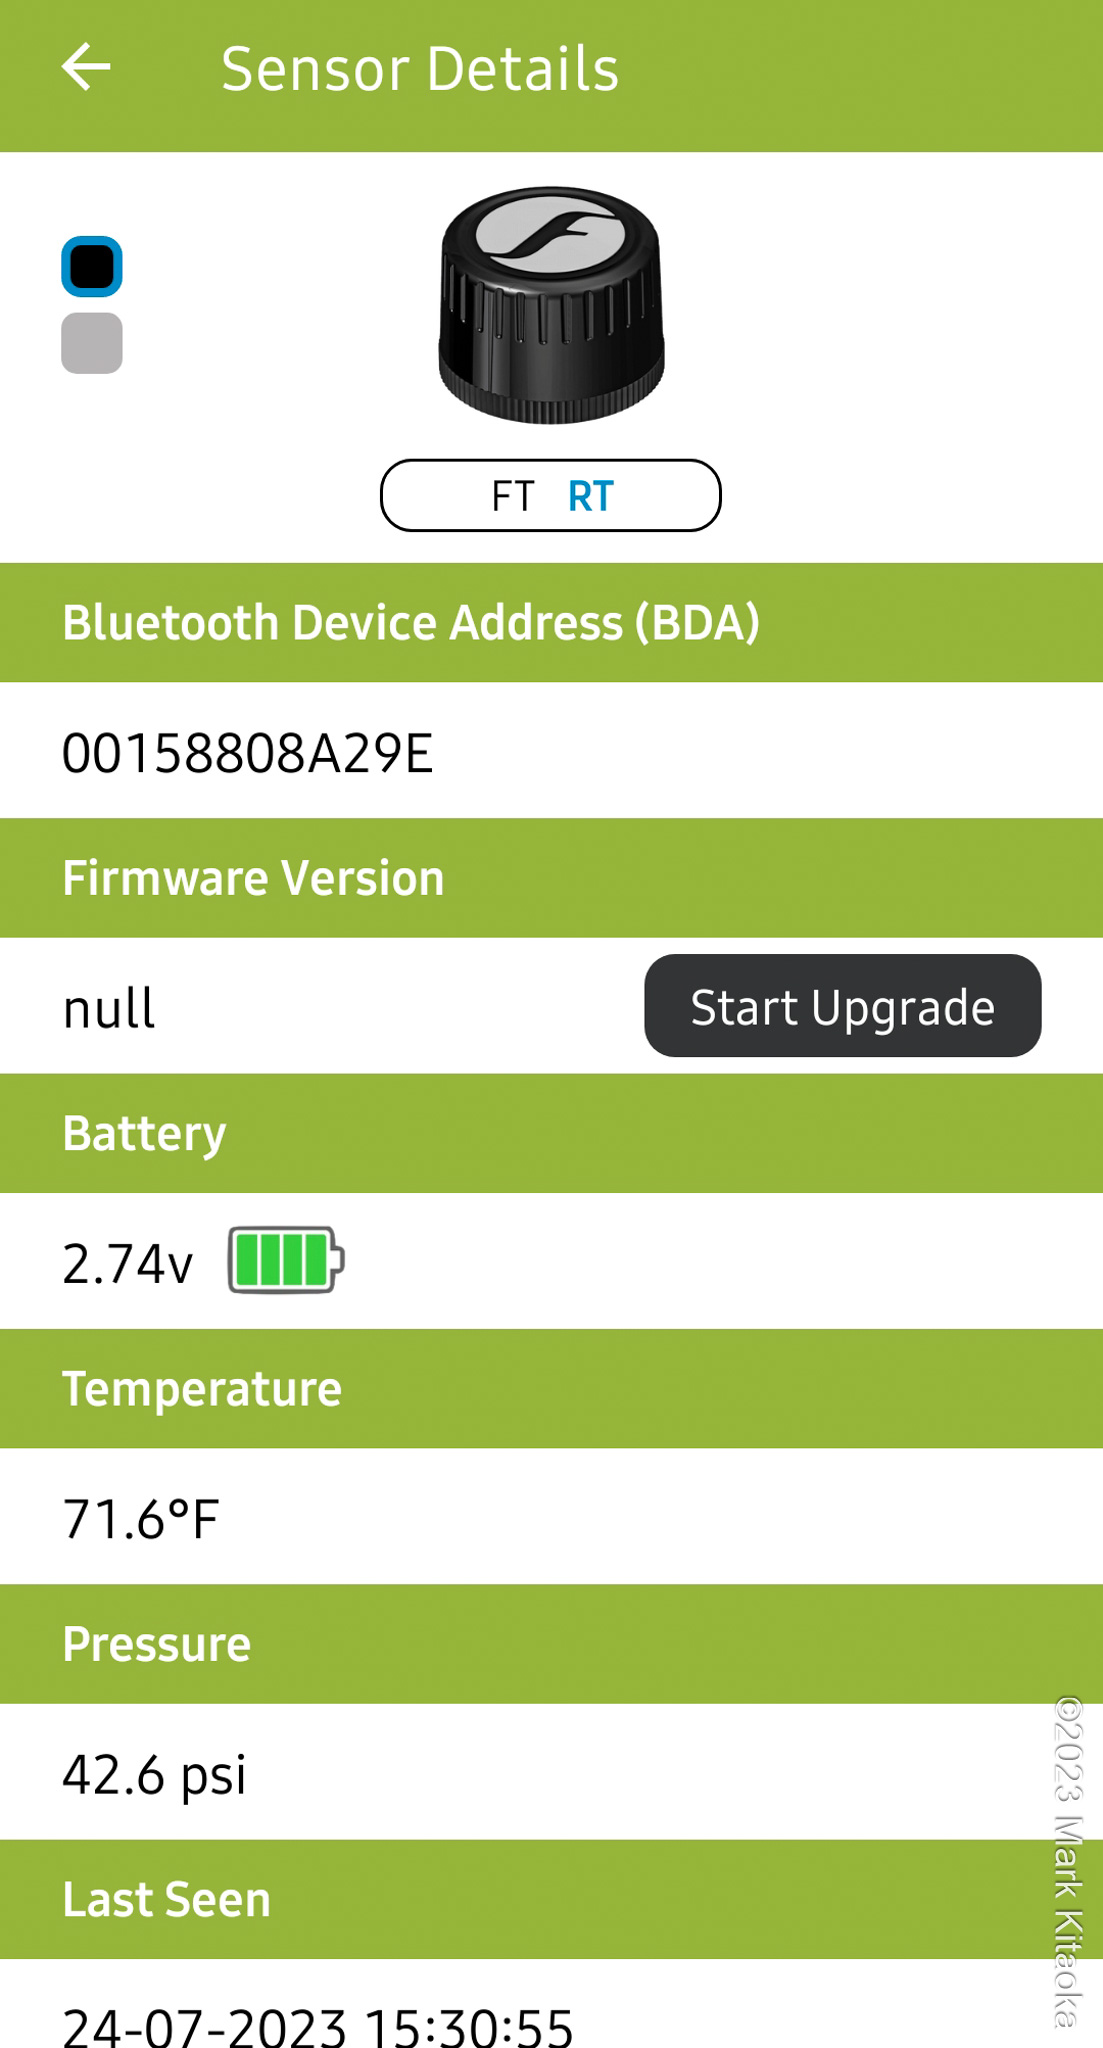 Screenshot of the sensor details on the app